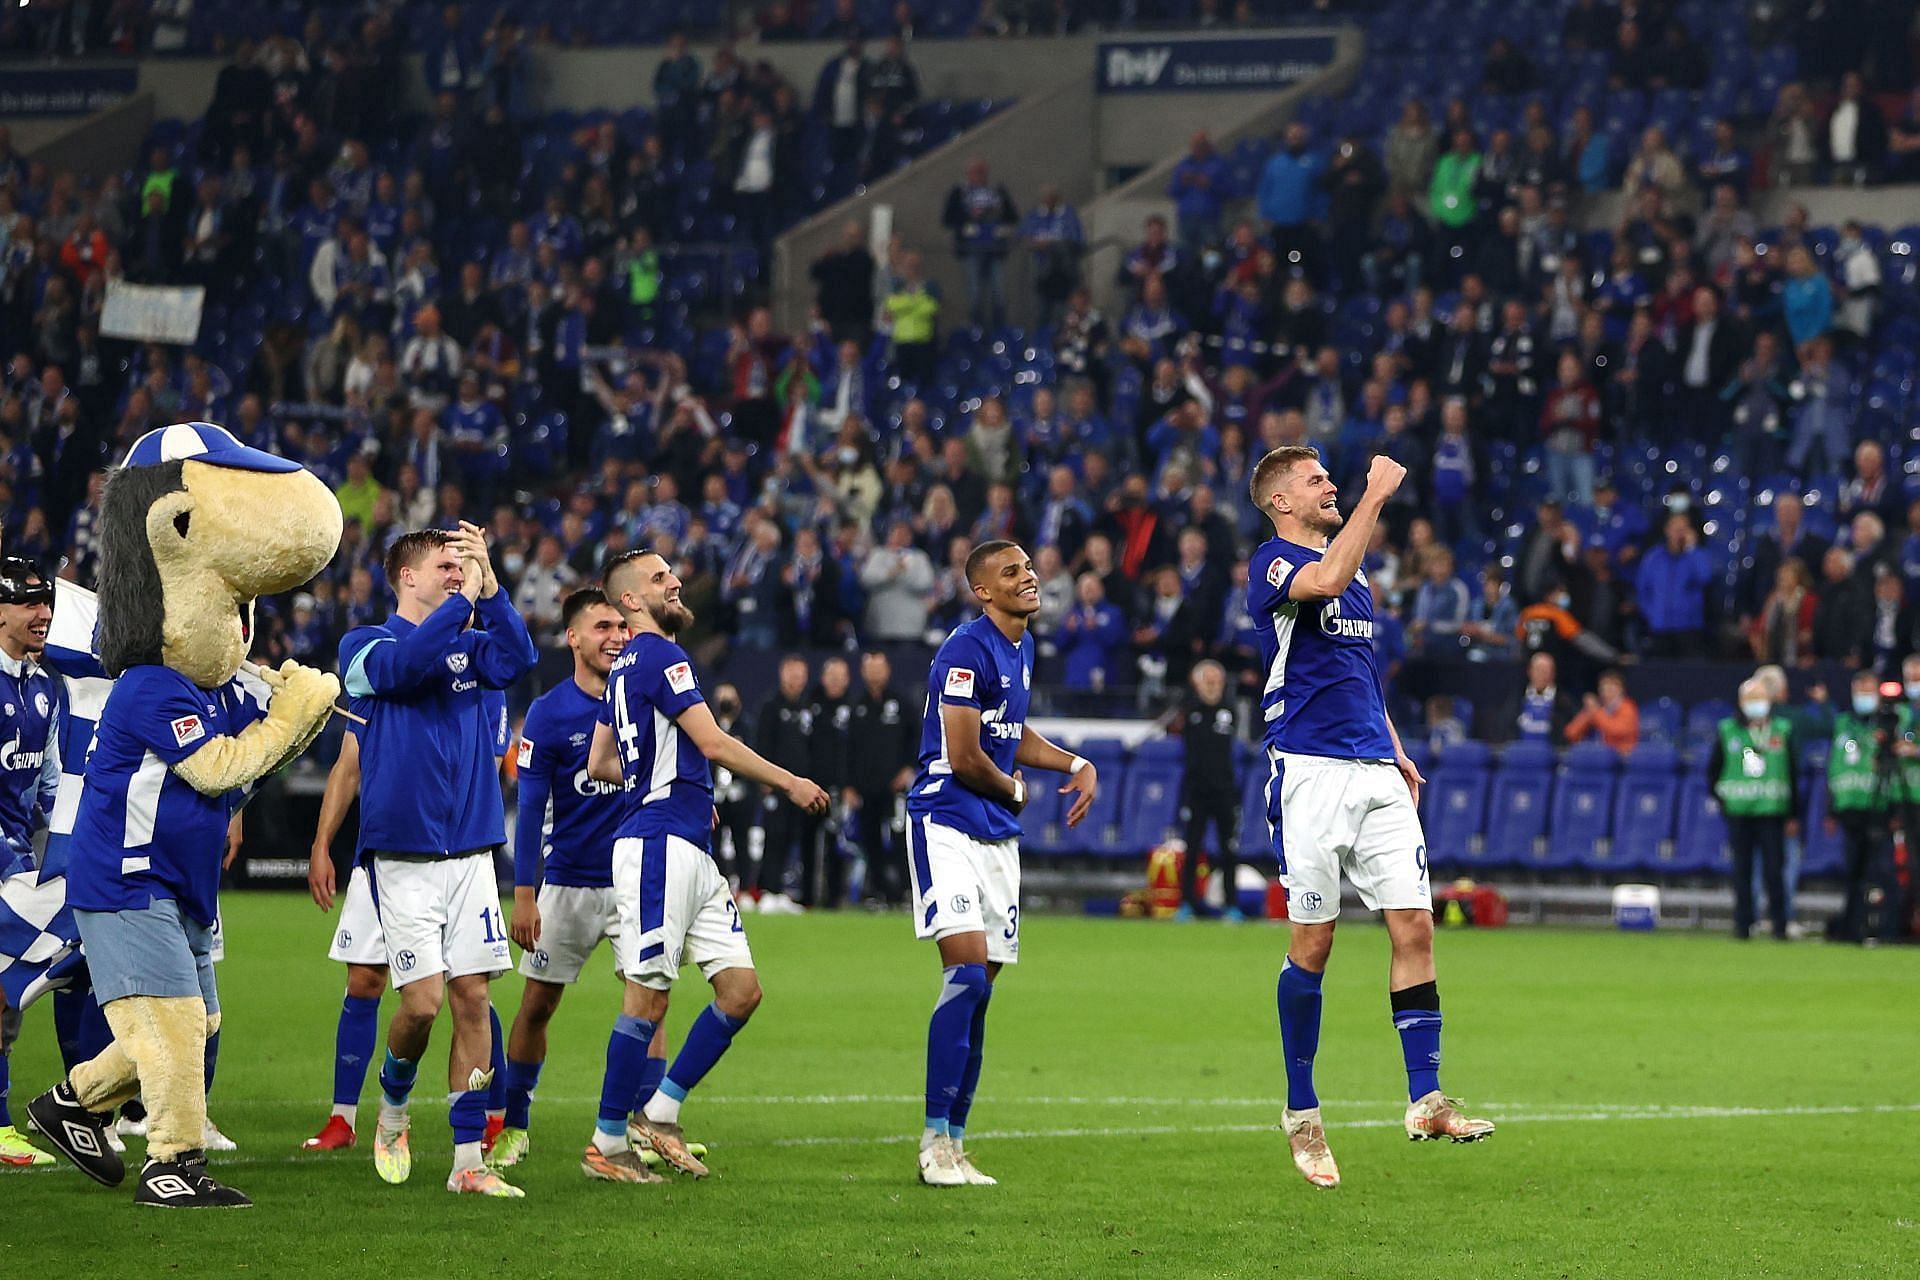 Schalke vs Heidenheim preview - 2. Bundesliga